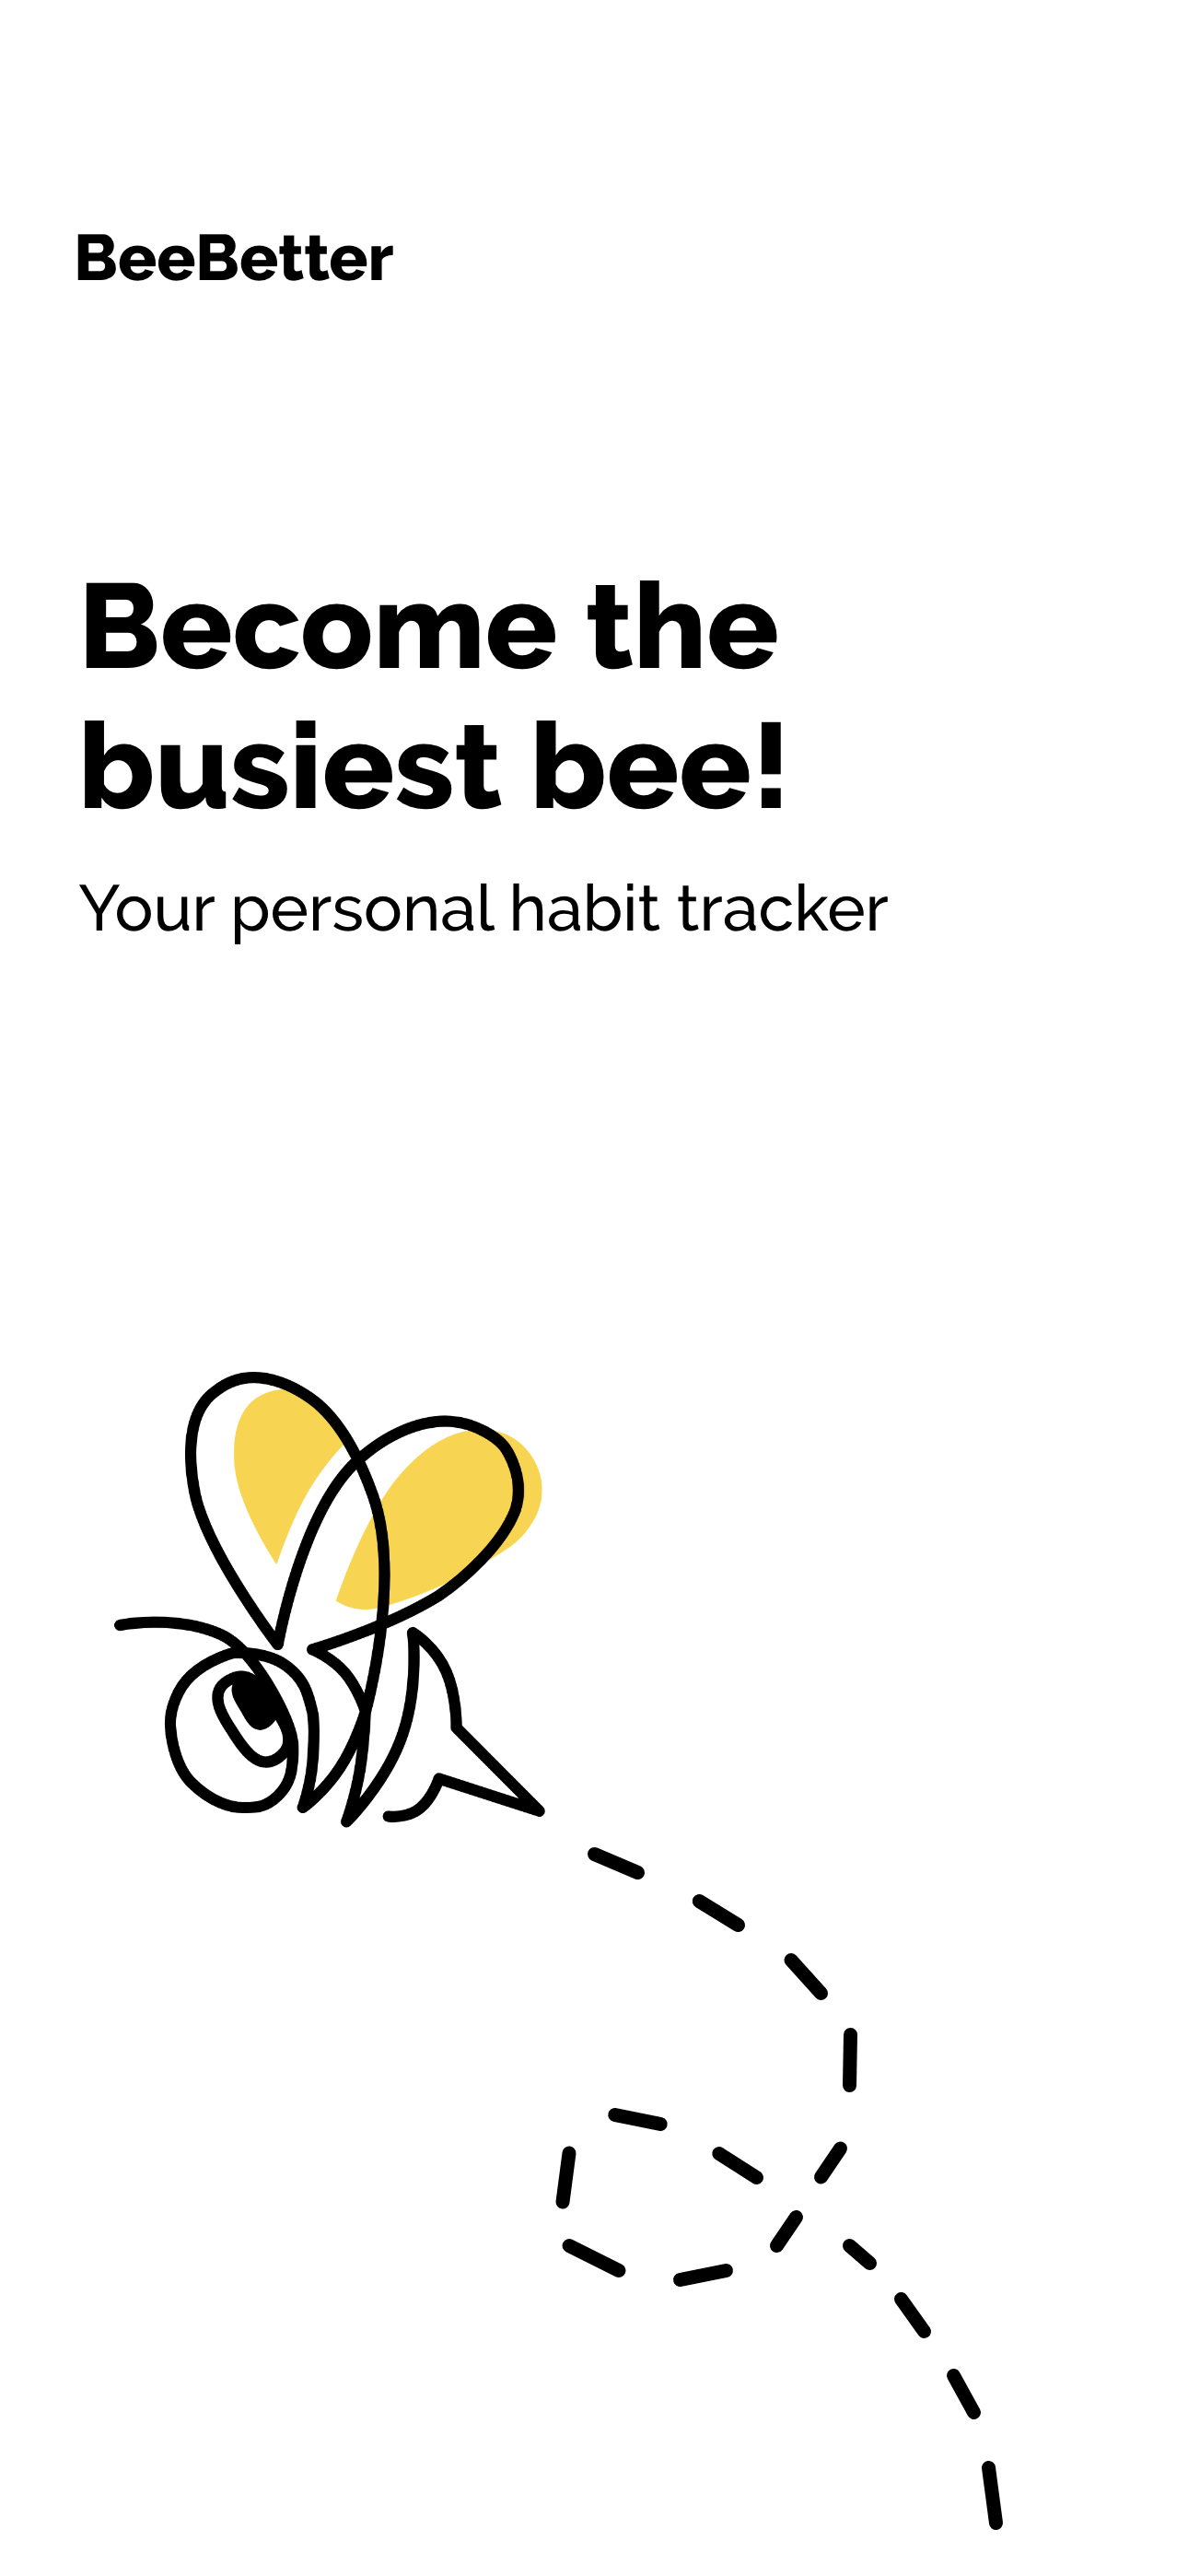 beebetter - Personal habit tracker